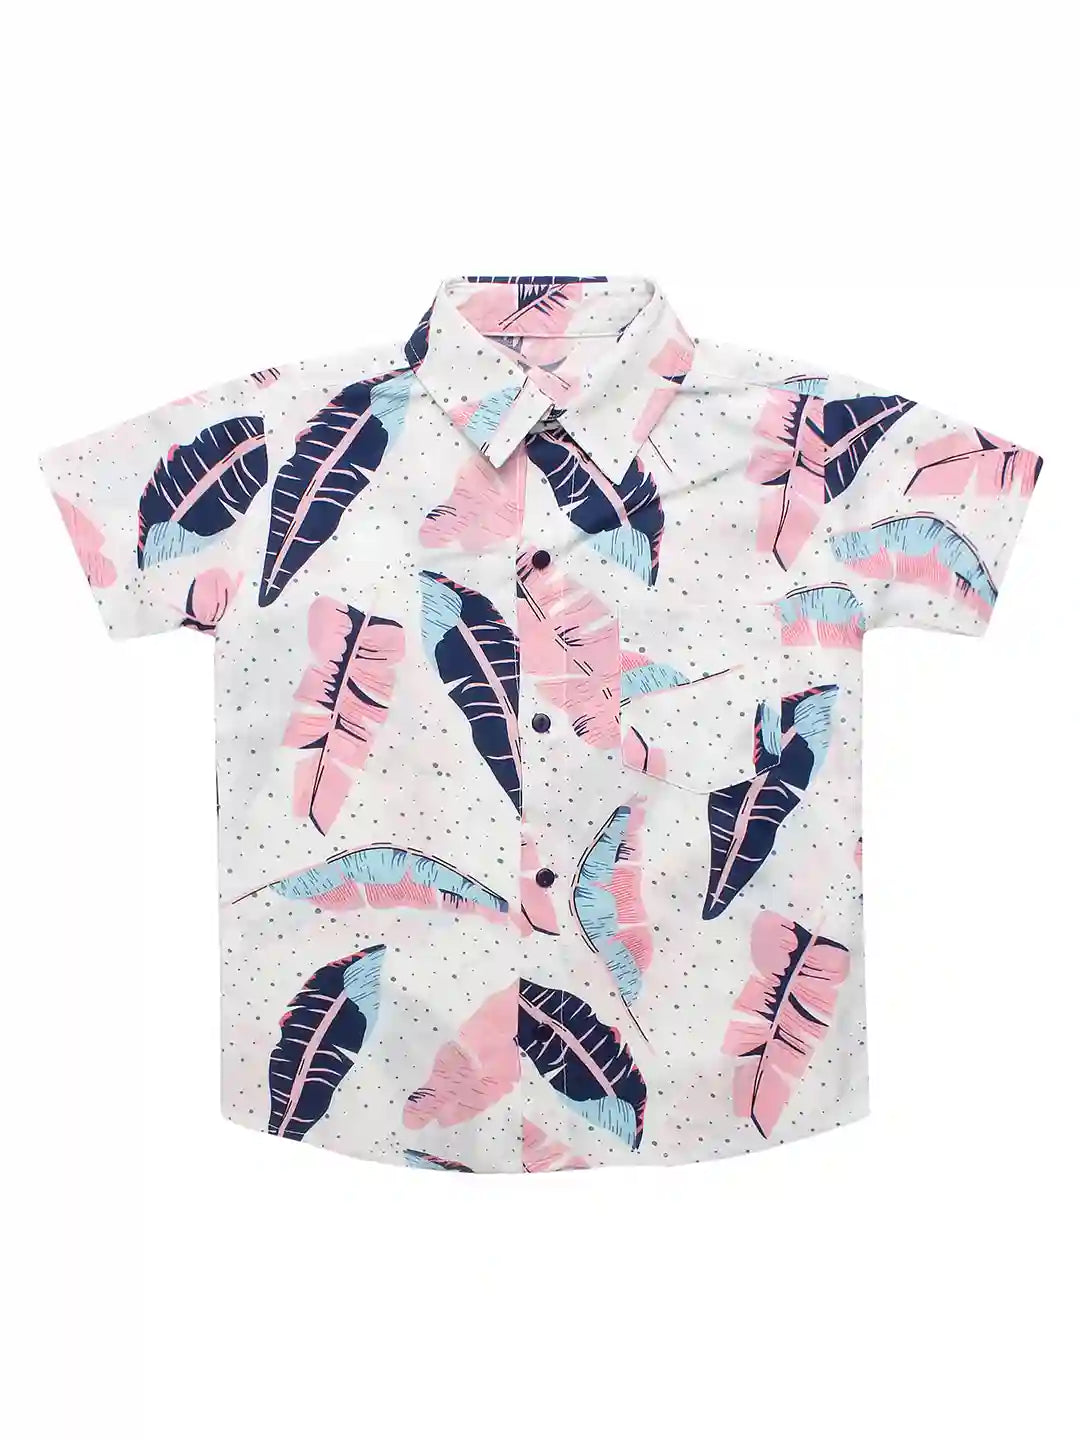 Boys Co-ord Set, Floral Print Shirt & Shorts Ensemble, Pink Colour